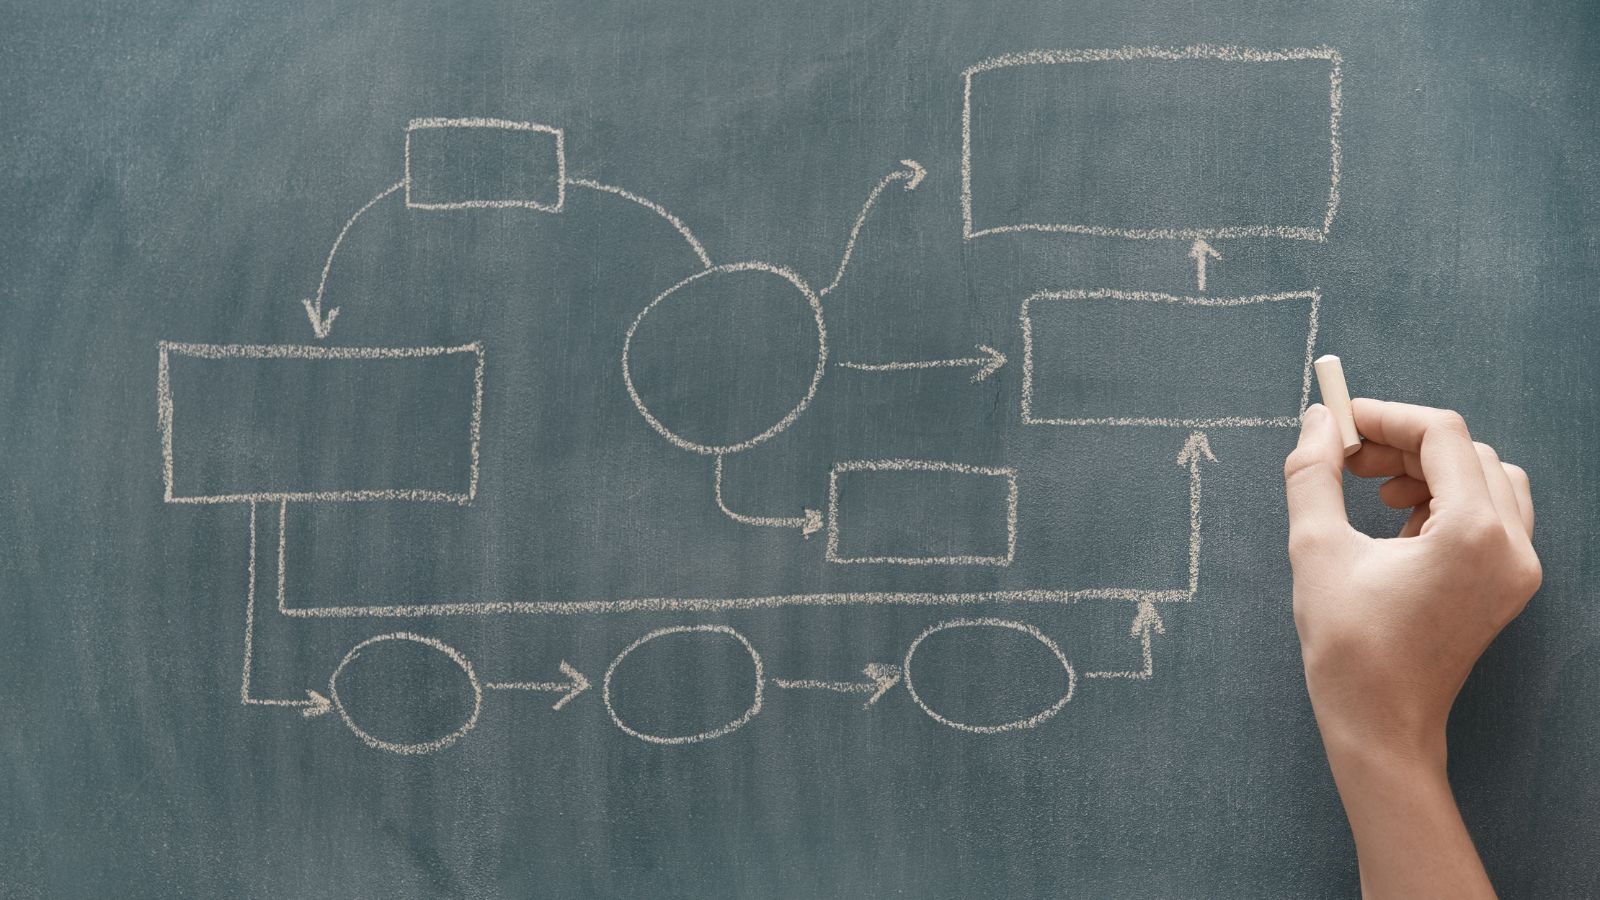 a diagram on a chalkboard